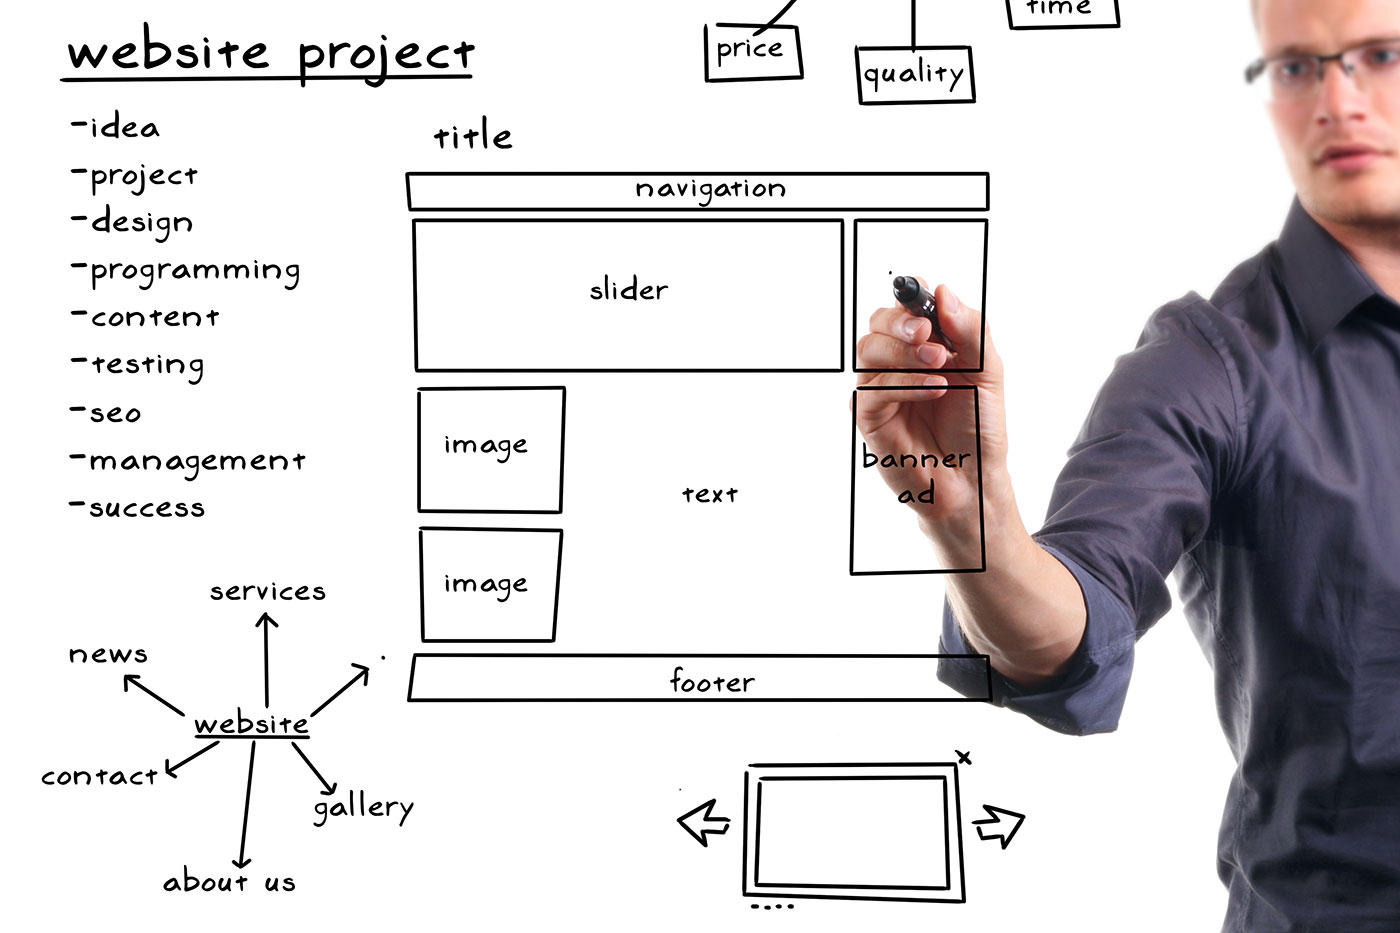 web developer planning a website project